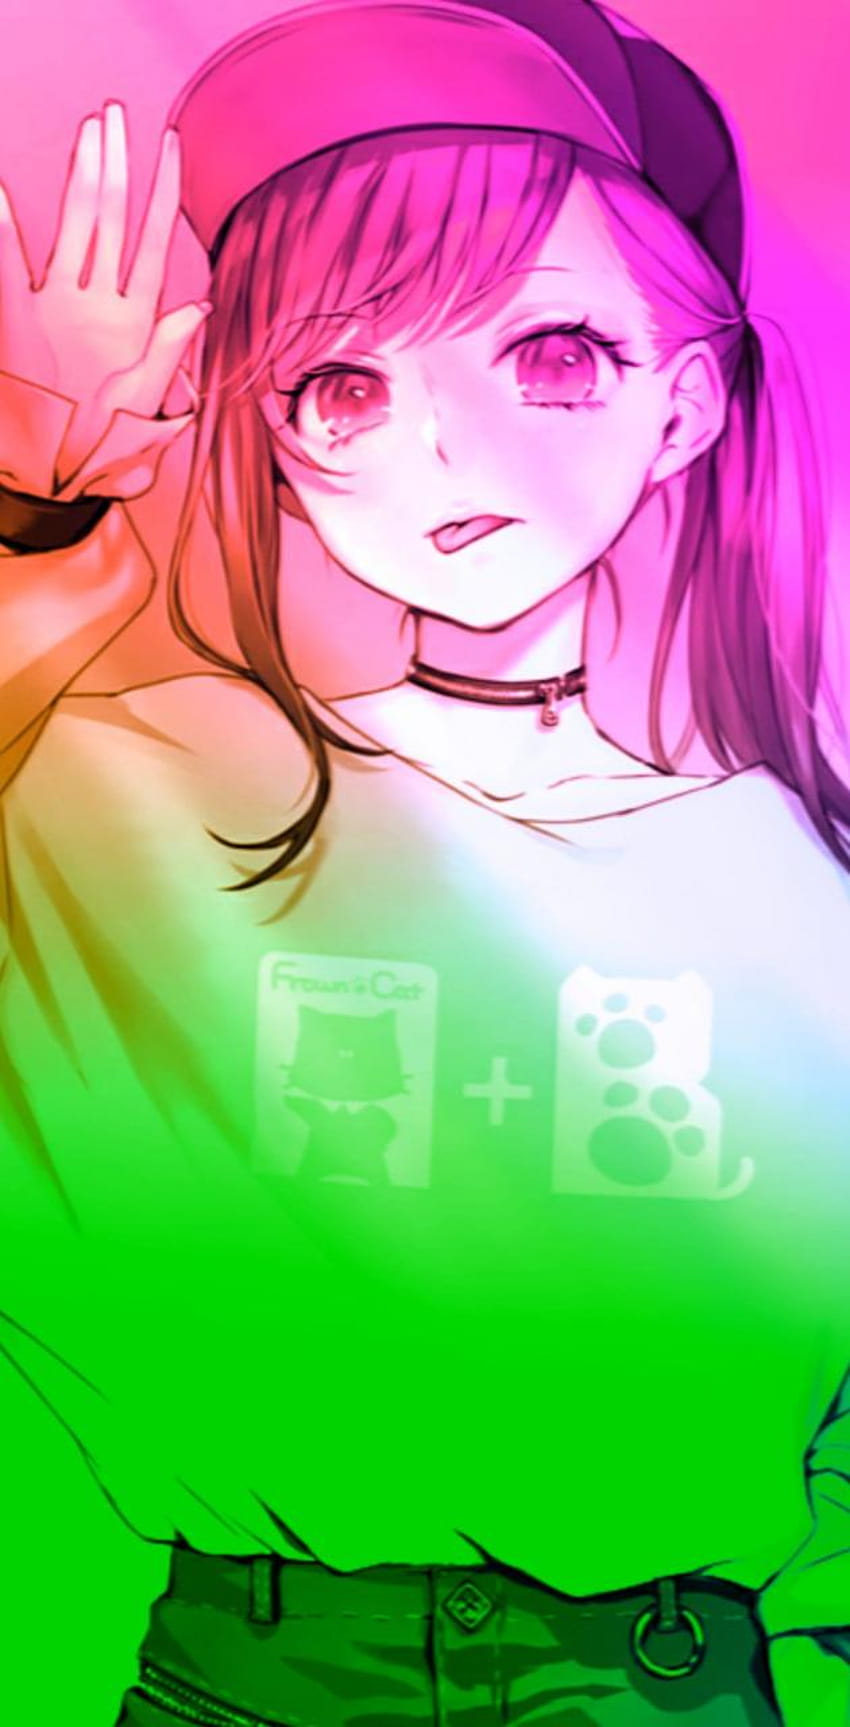 blissful, sweet girl, rainbow hair, anime Character...